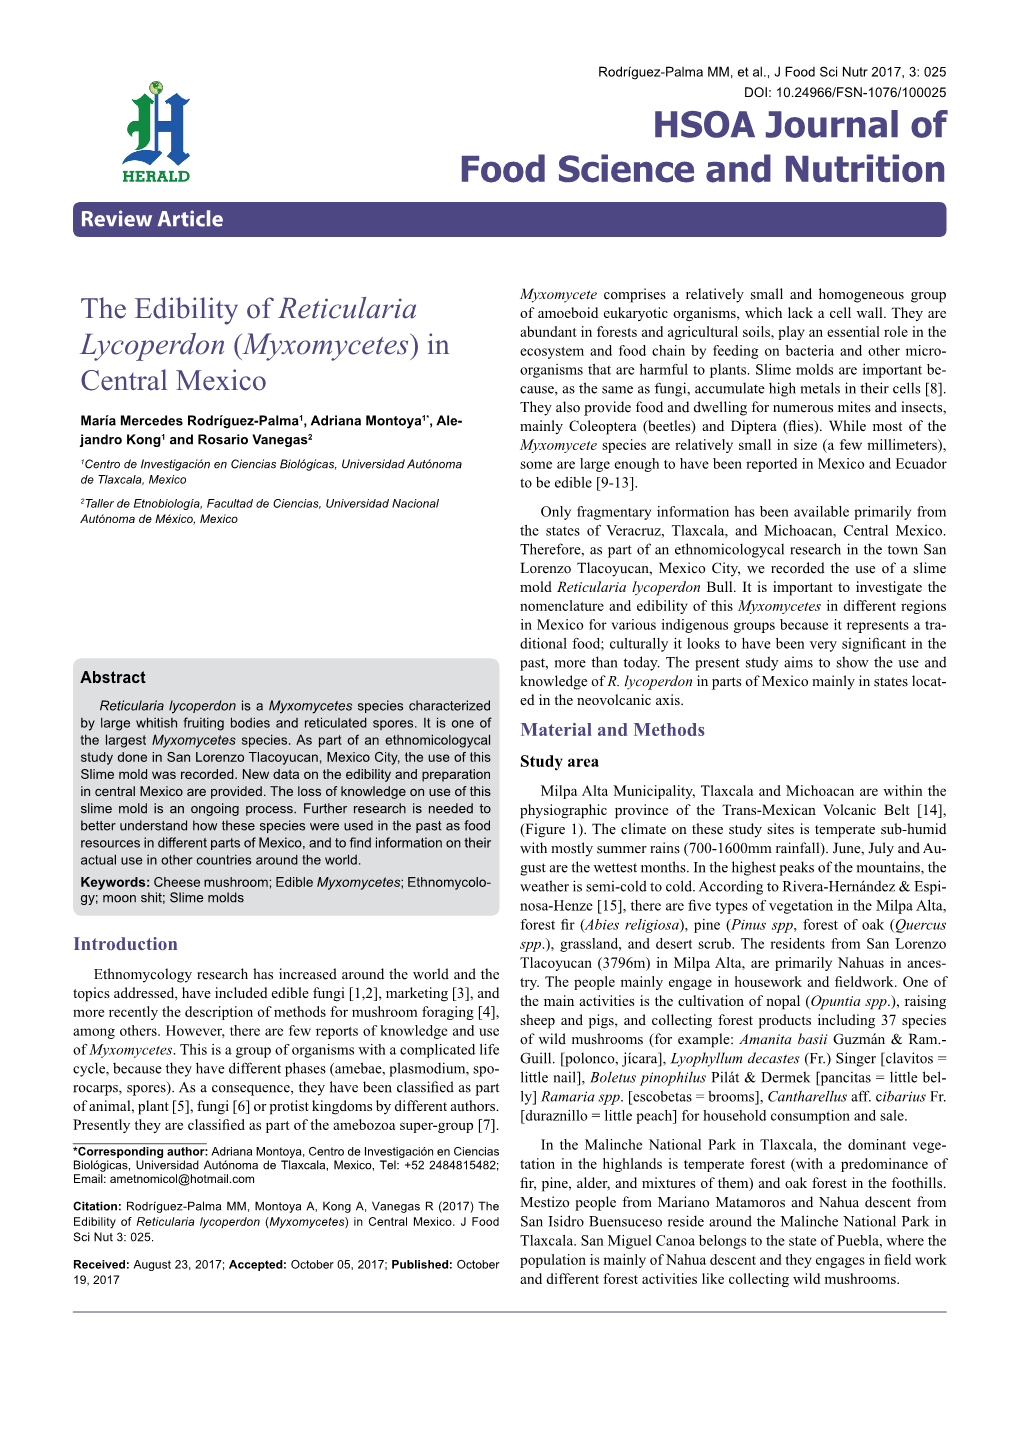 The Edibility of Reticularia Central Mexico